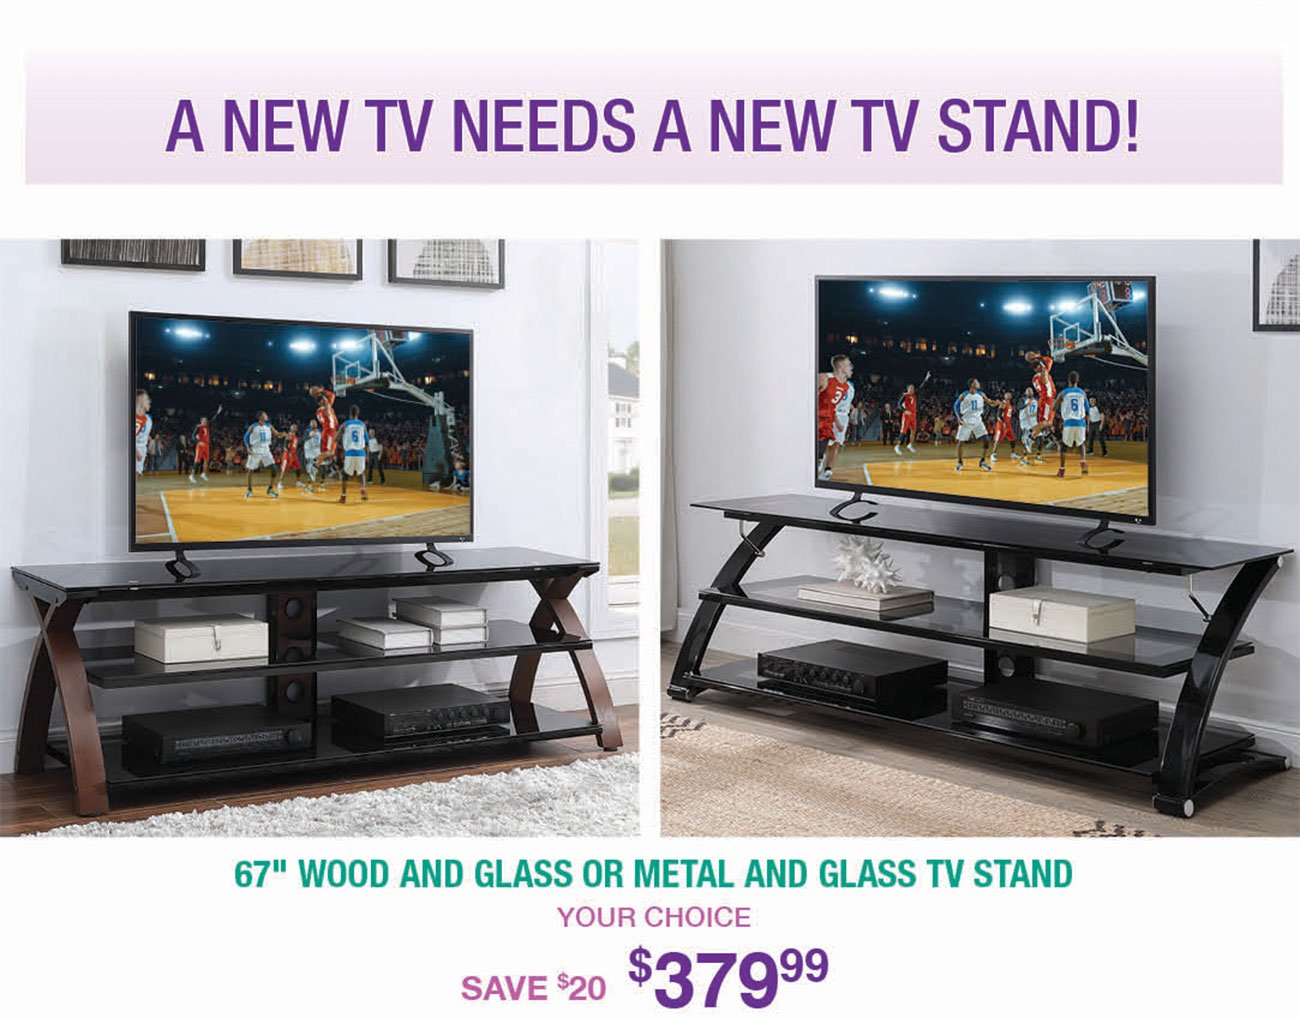 Wood-Glass-Metal-Glass-TV-Stands